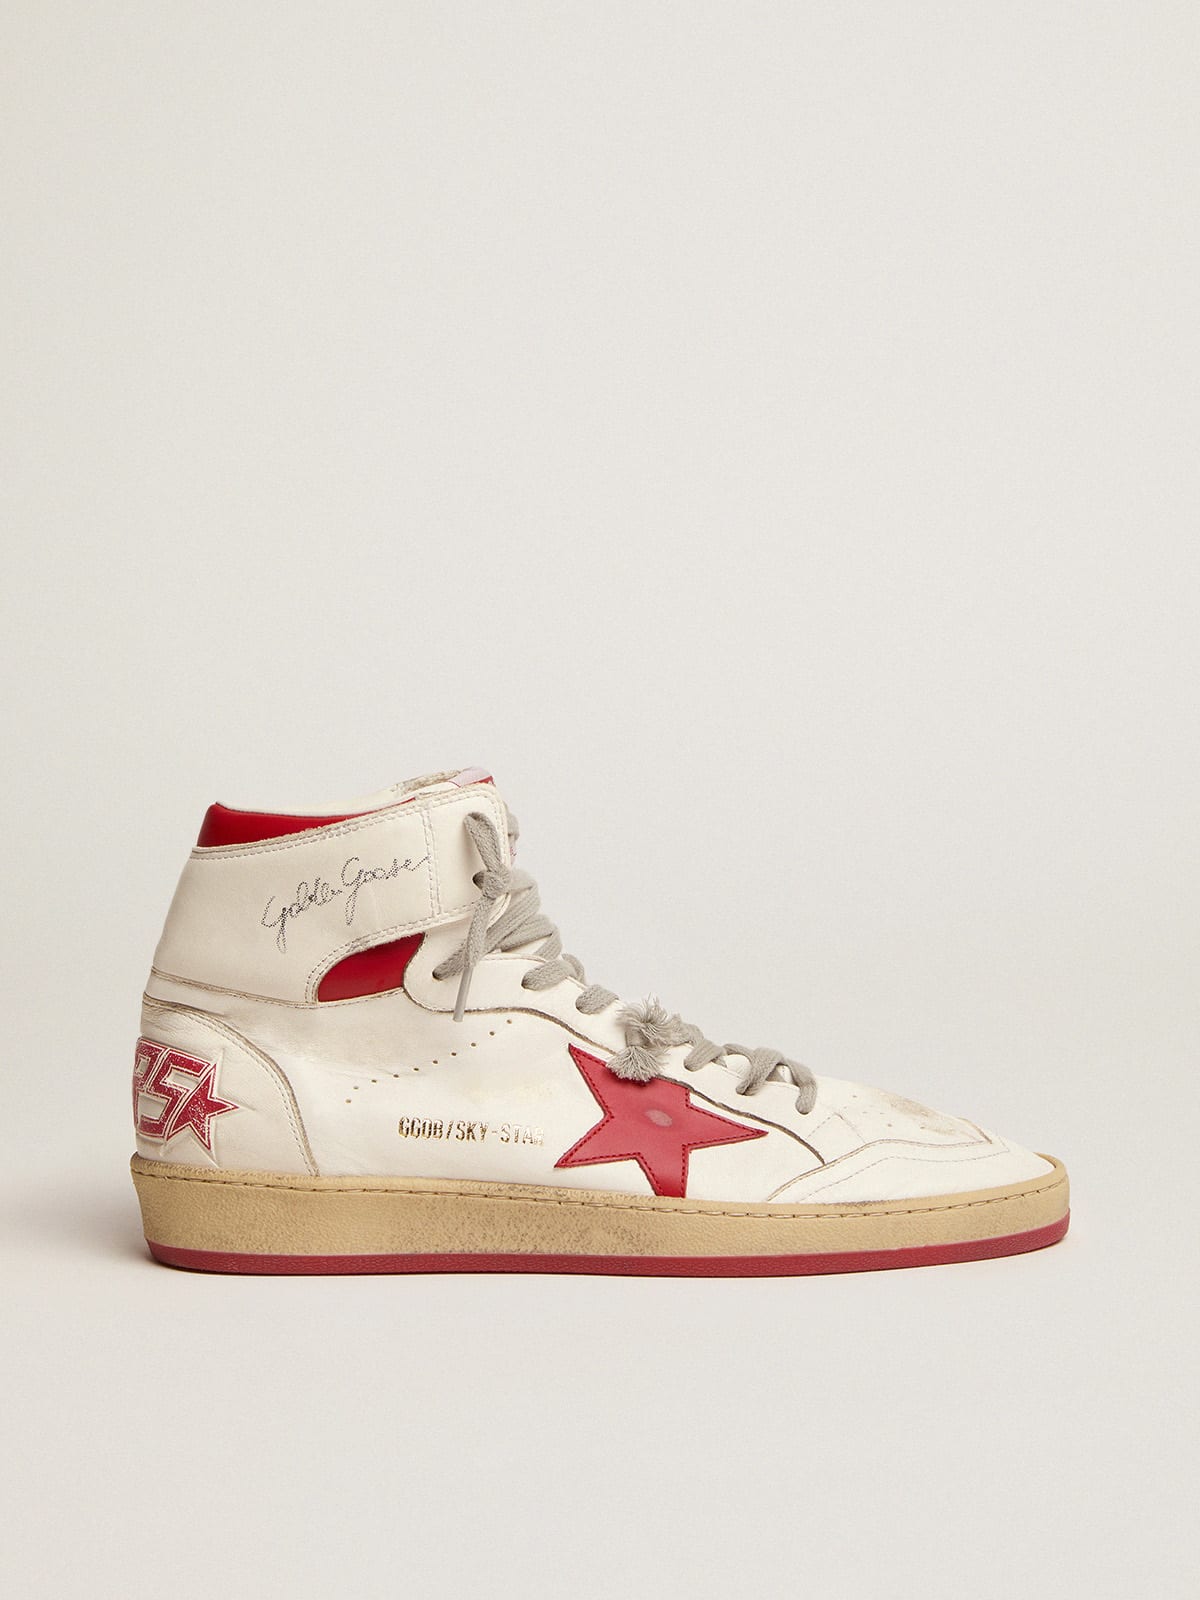 Golden Goose - Sneakers Sky-Star en cuir nappa blanc avec étoile et contrefort en cuir rouge in 